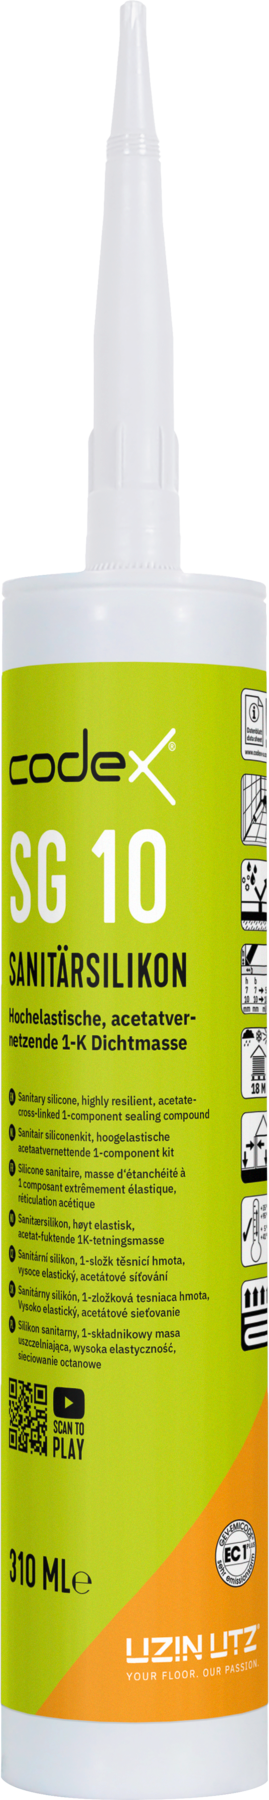 Codex SG 10 310 ml Sanitärsilikon Cotto